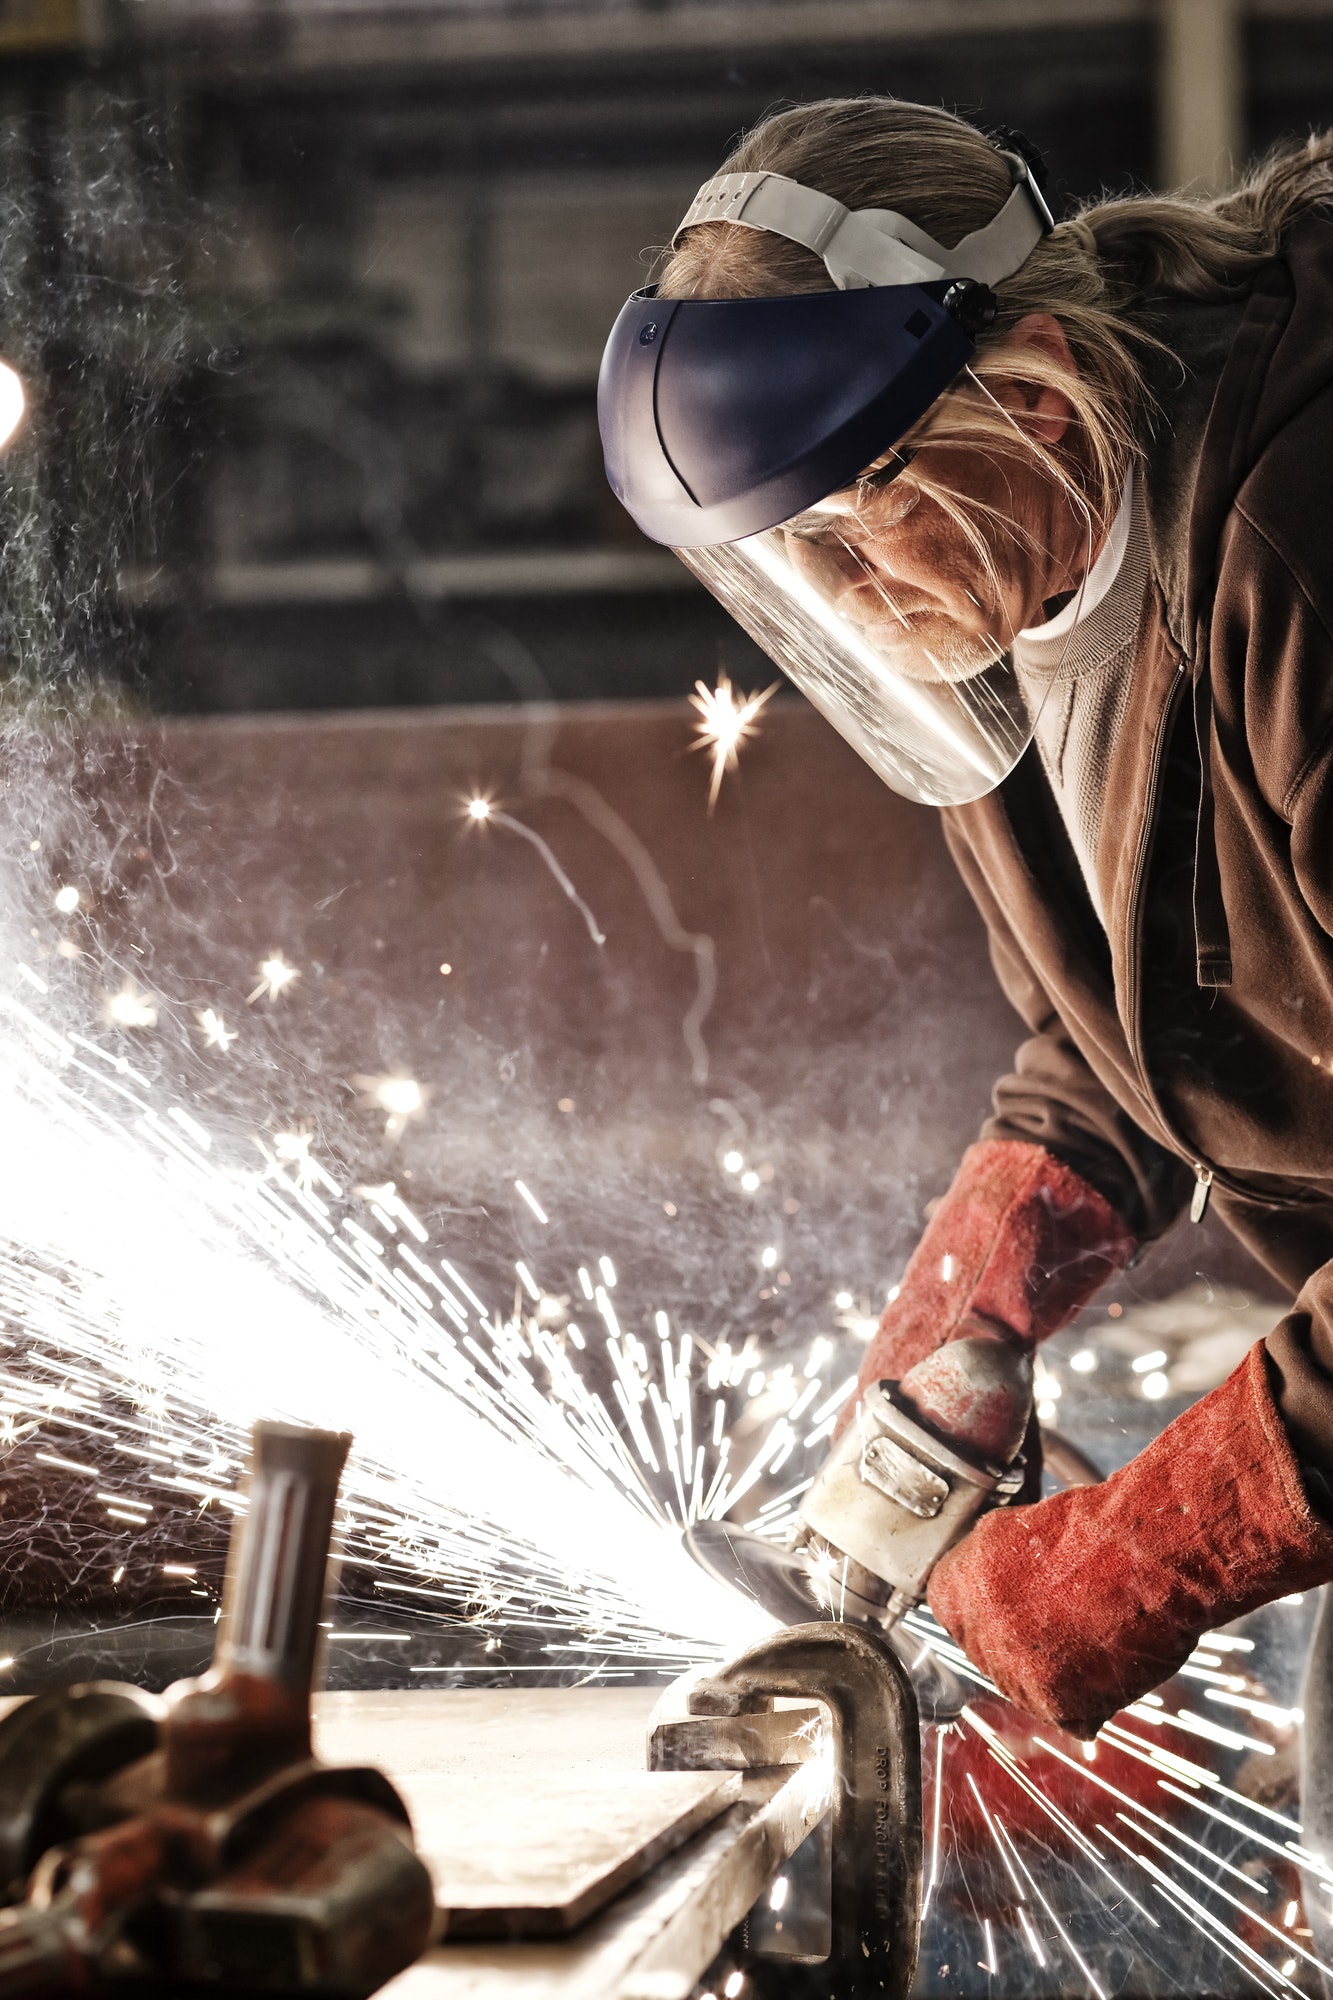 factory worker grinding a steel edge in a sheet metal factory